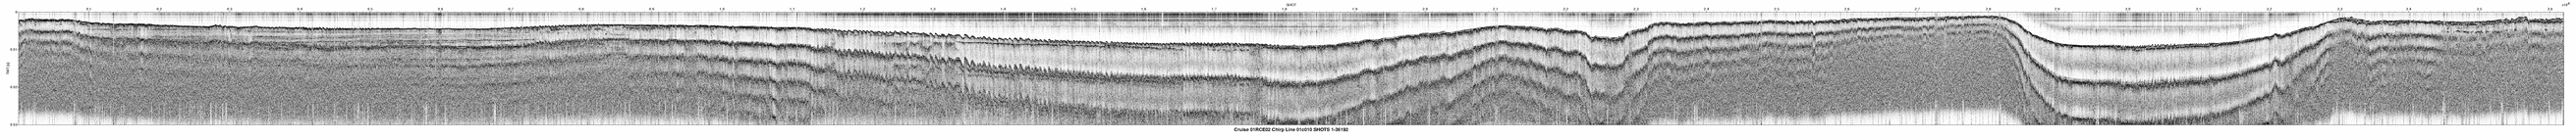 01RCE02 01c010 seismic profile image thumbnail